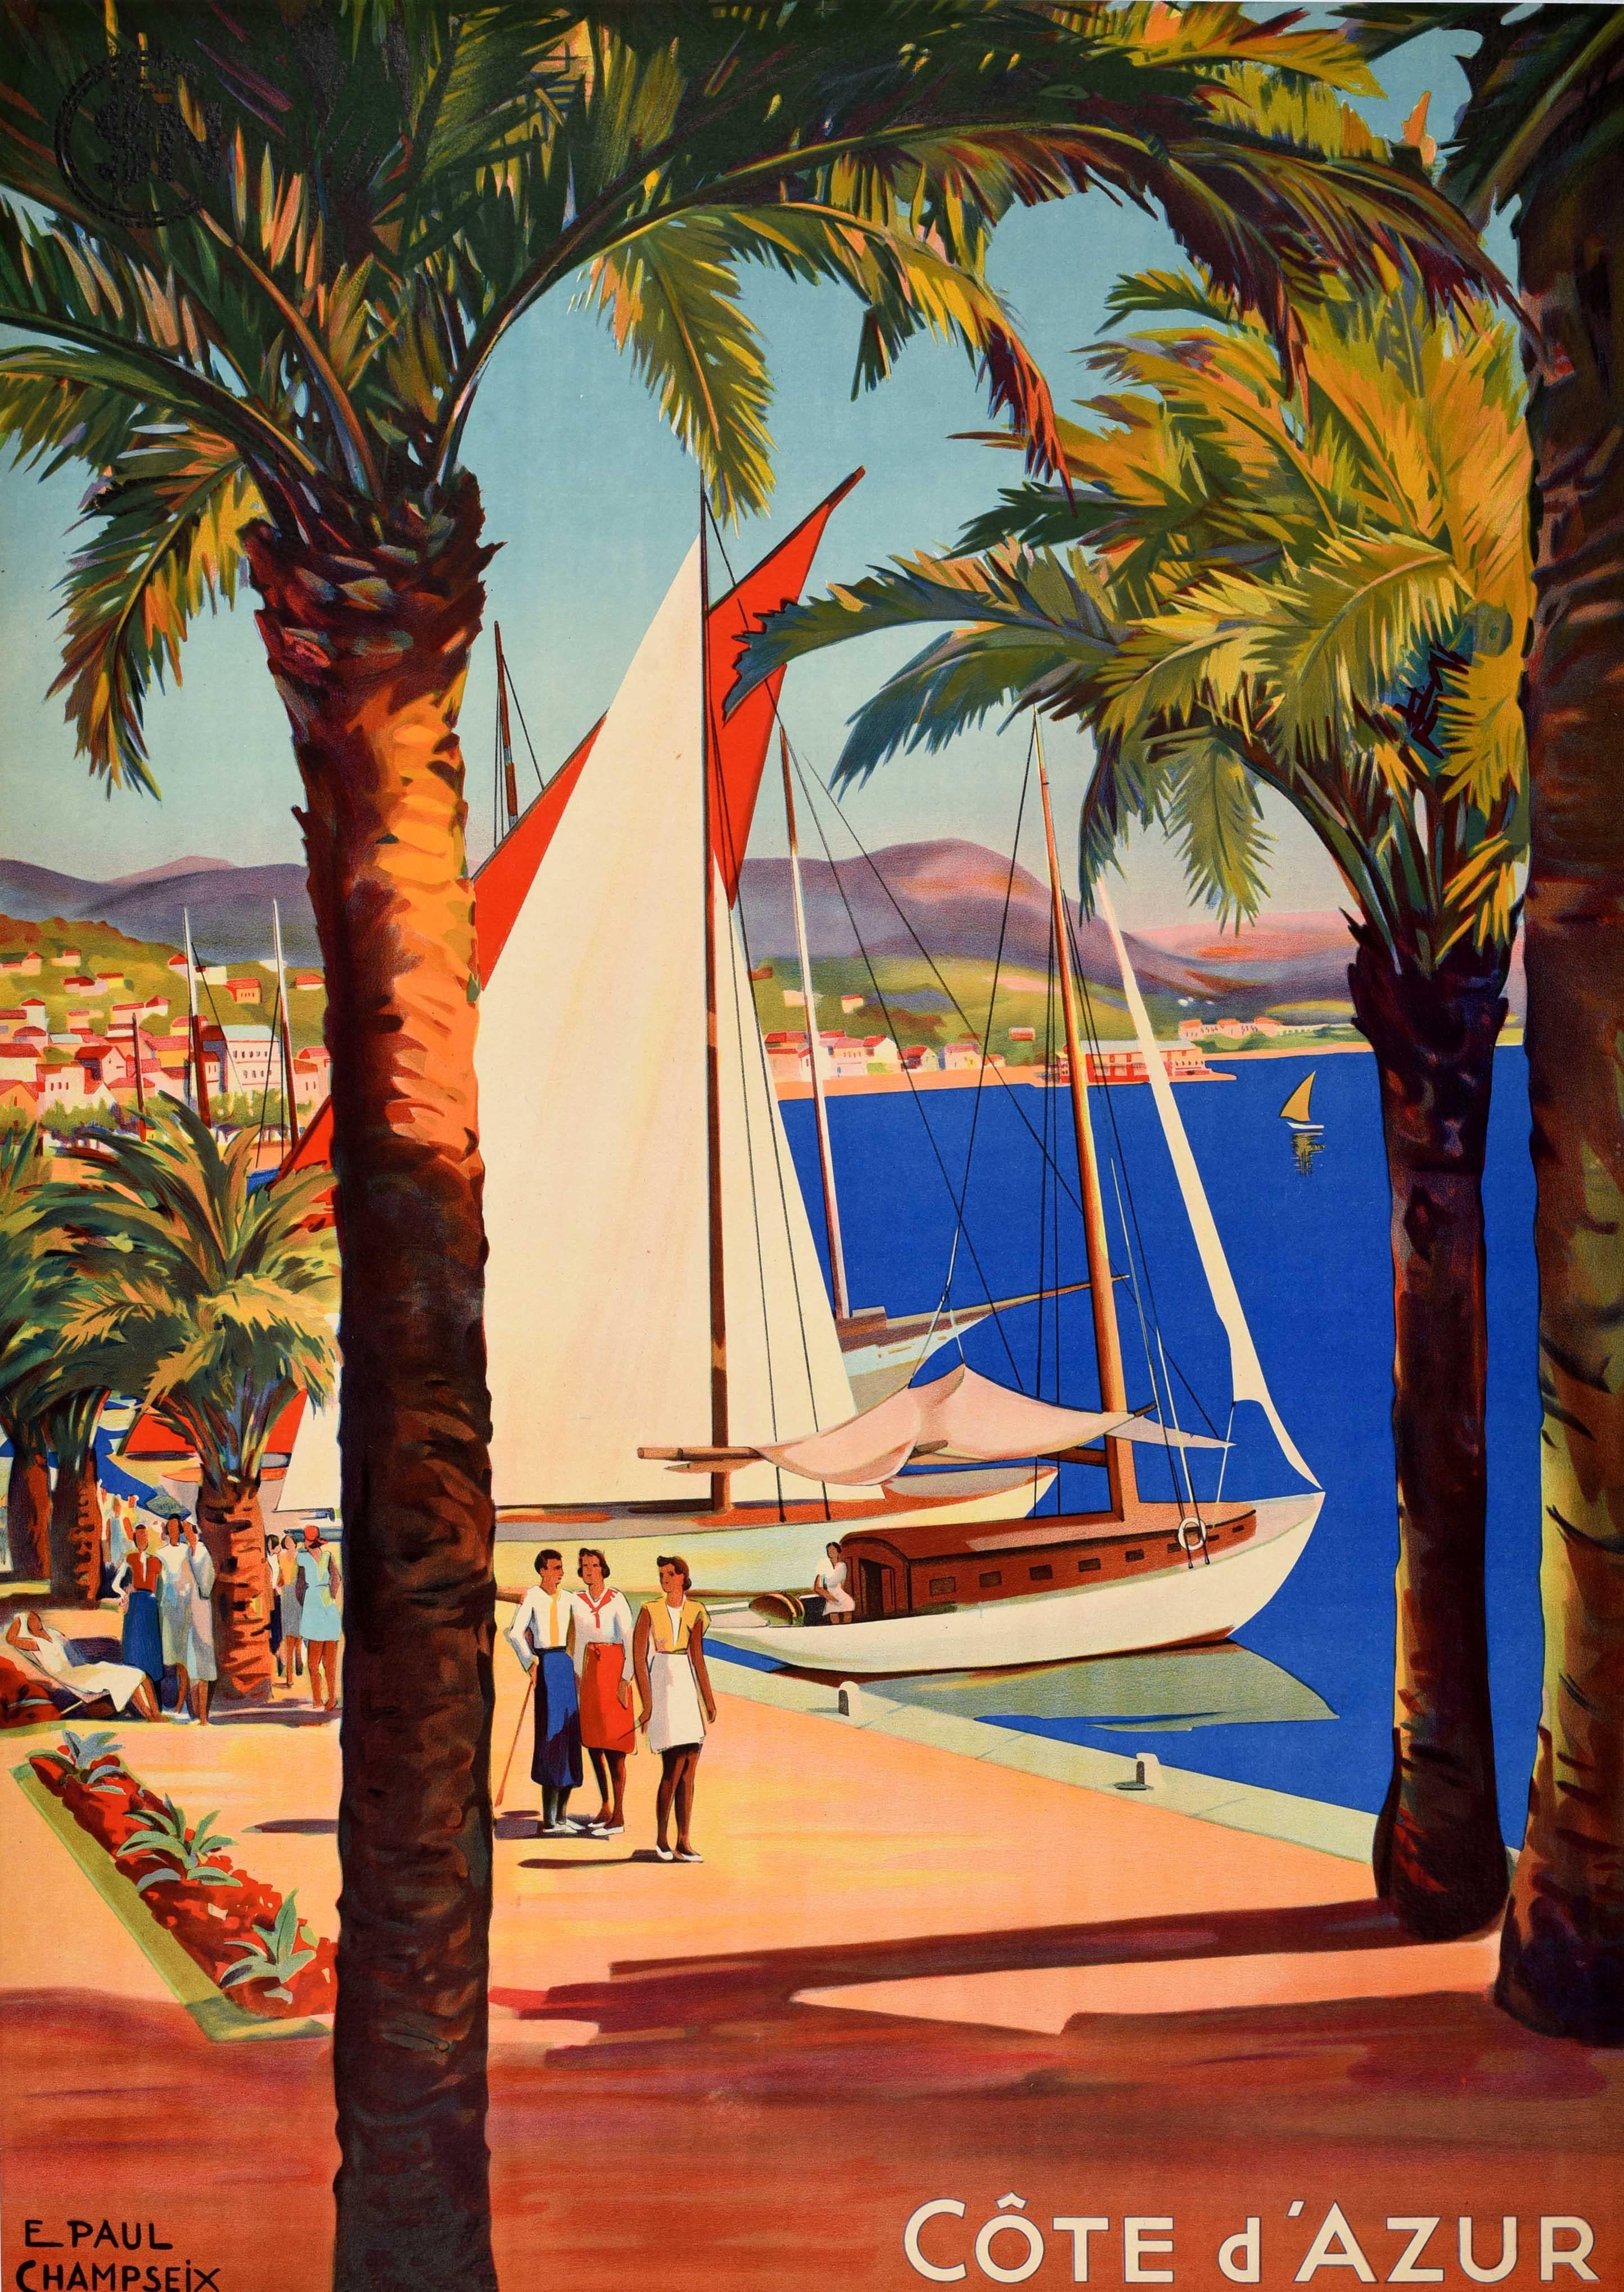 Original Vintage Travel Poster Bandol Cote d'Azur French Riviera Art Deco Design - Print by E. Paul Champseix